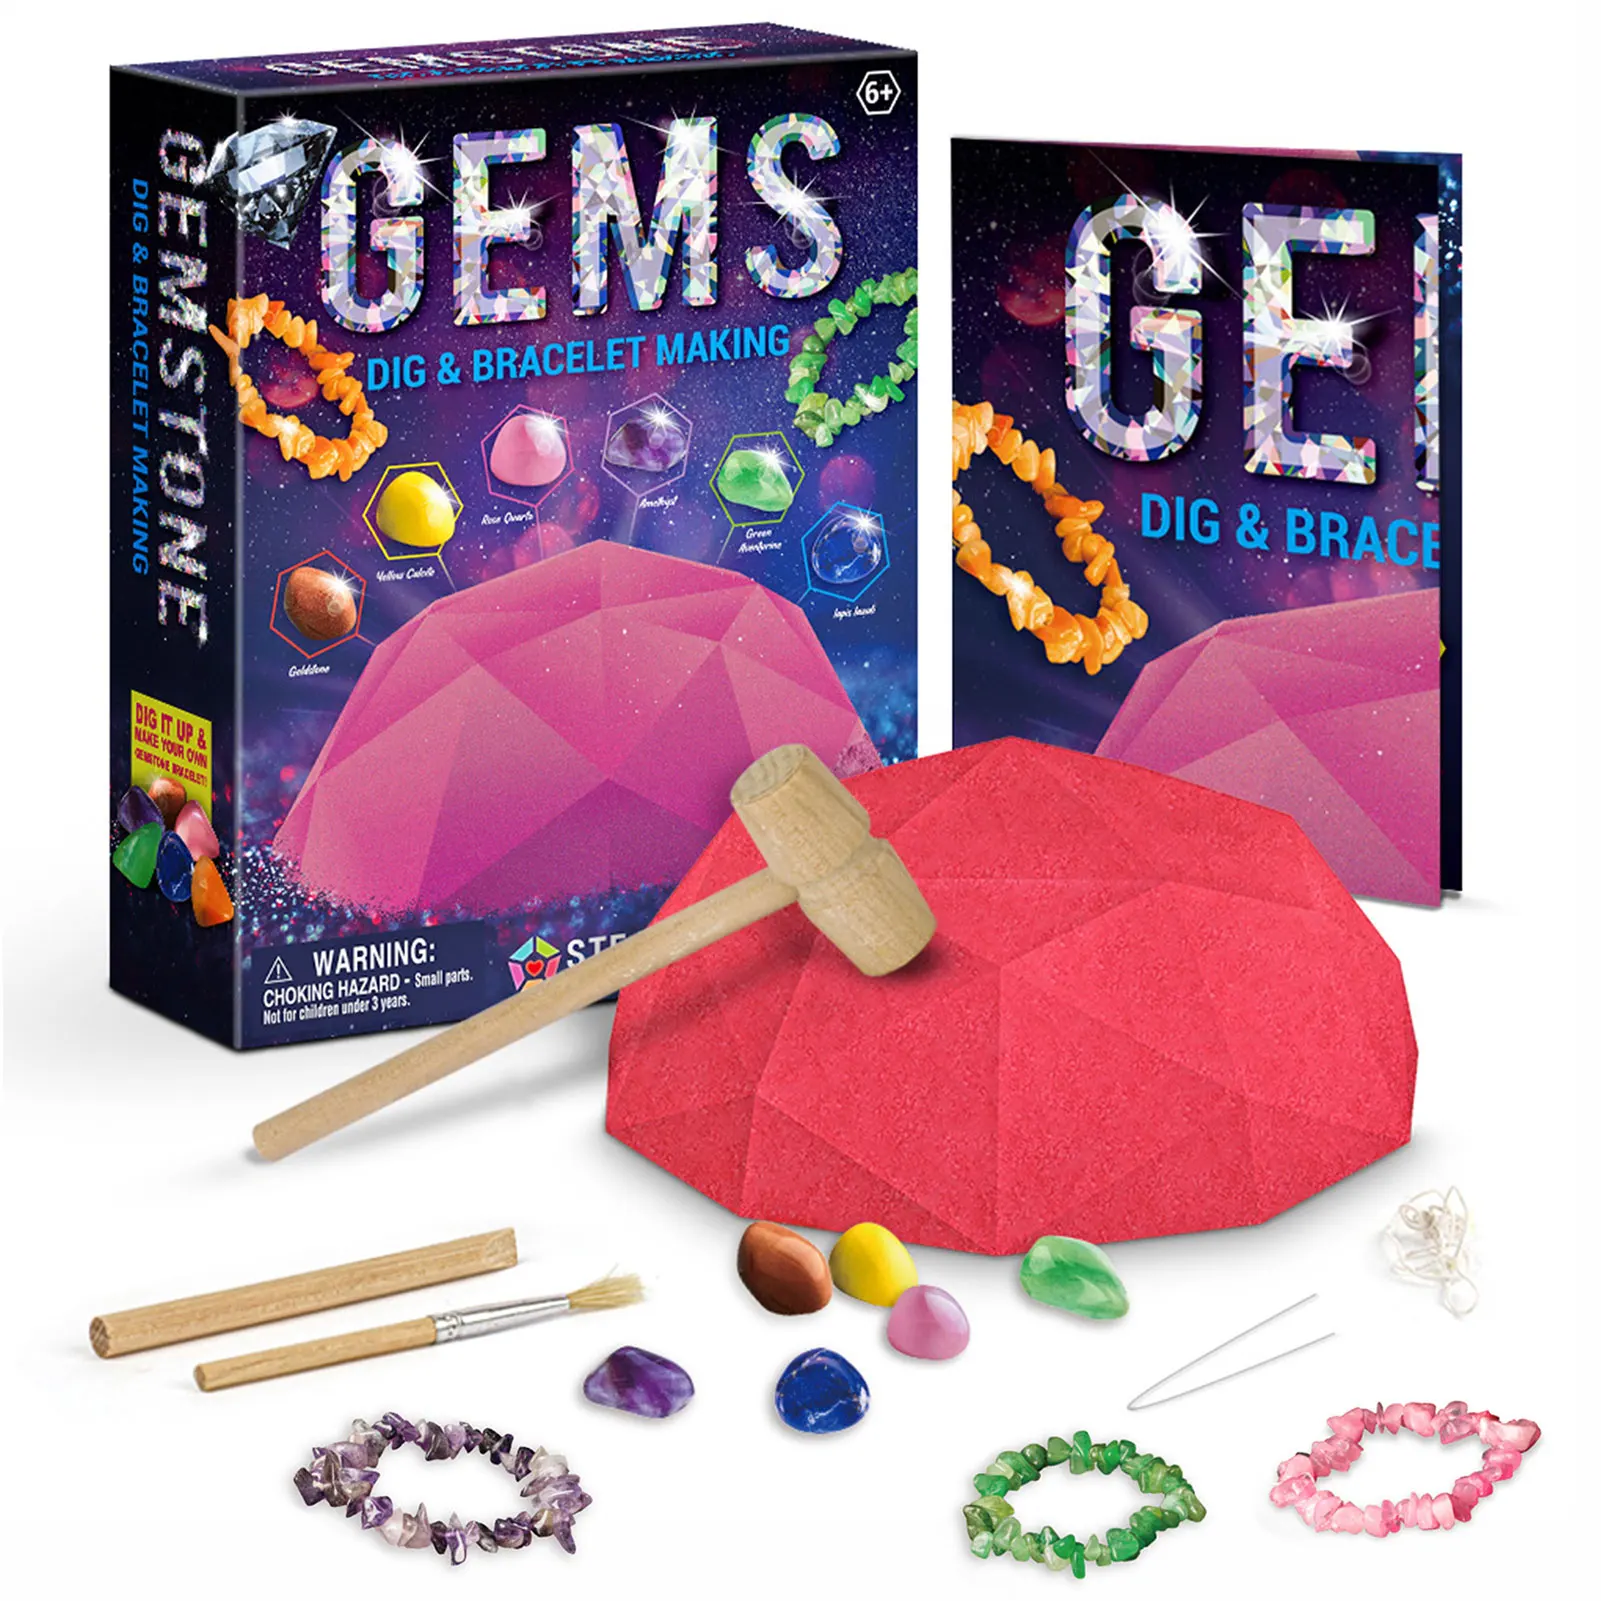 

Gemstones Mining Kit New Gemstone And Crystal Dig Kit Educational Excavation STEM Toy With Excavation Tools DIY Gemstone